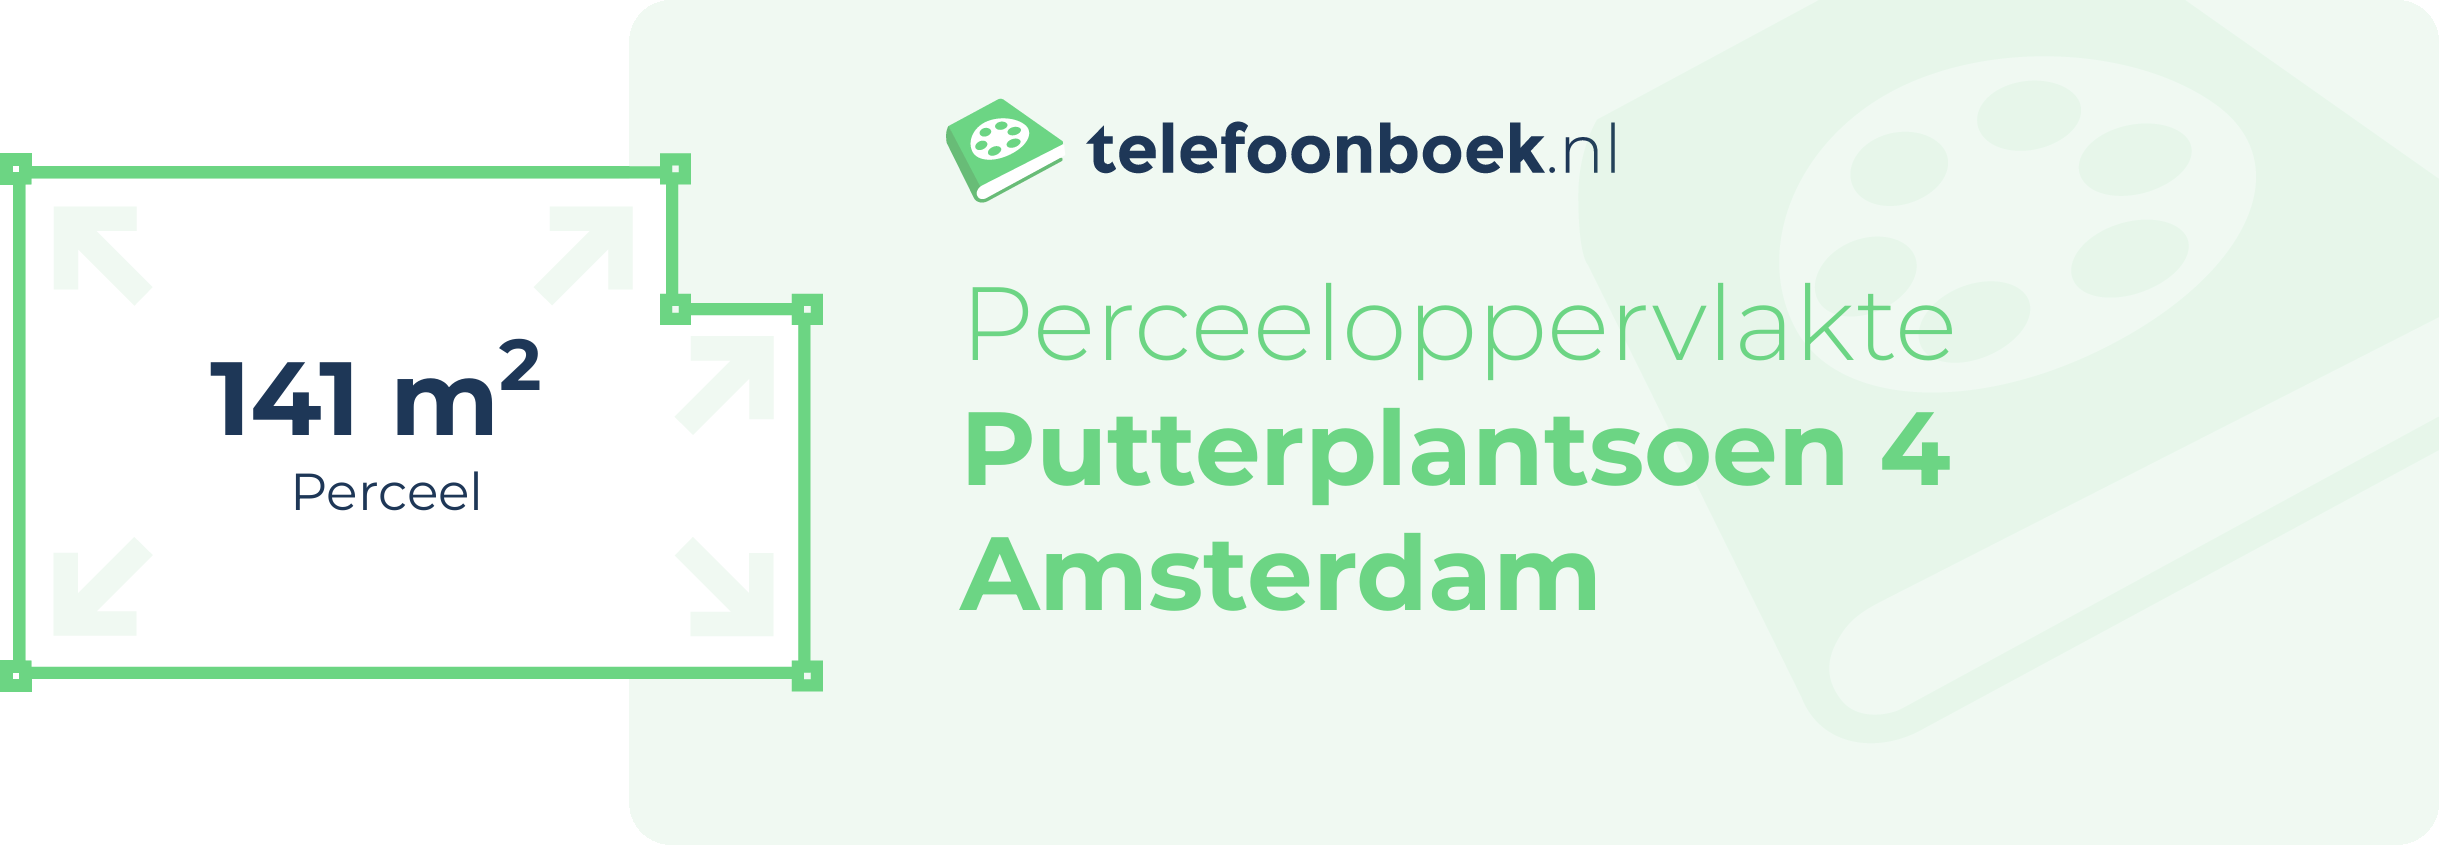 Perceeloppervlakte Putterplantsoen 4 Amsterdam